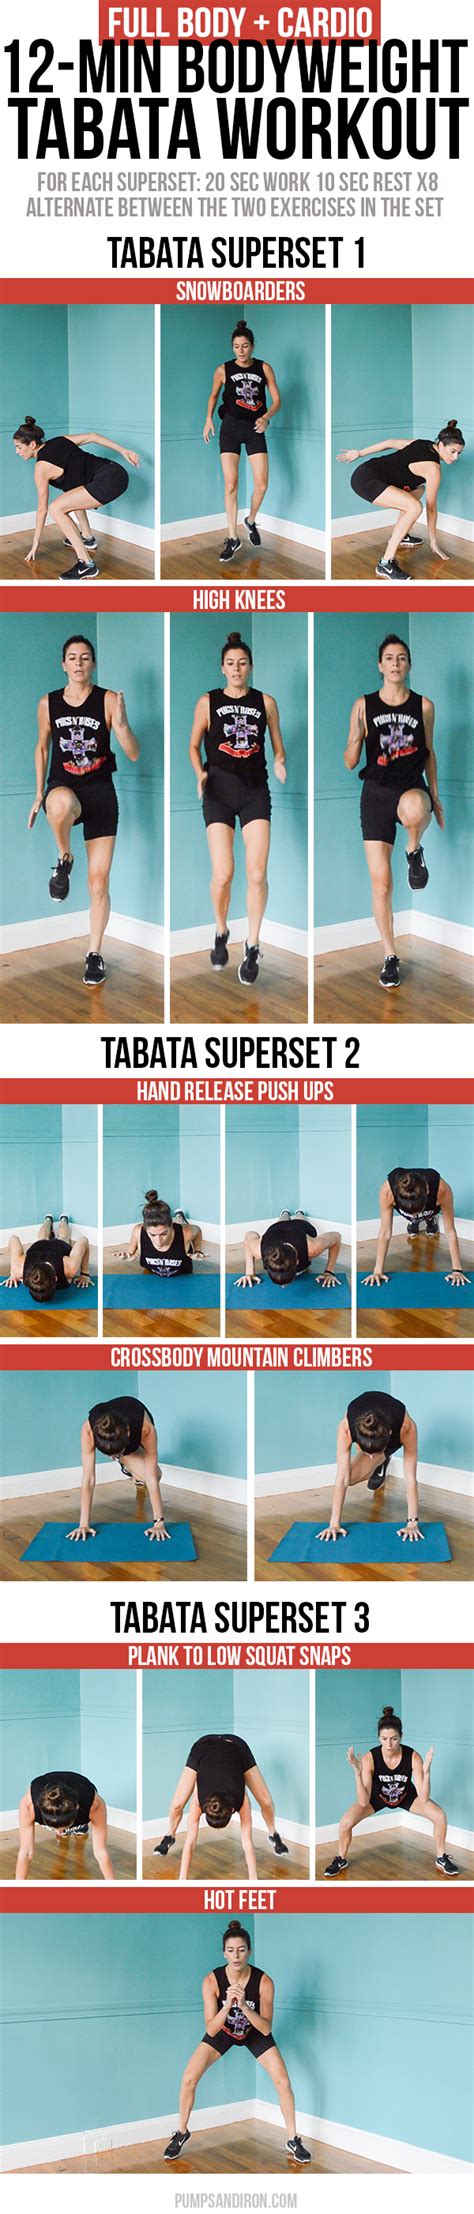 Minute Bodyweight Tabata Workout Series Full Body Cardio Pumps Iron